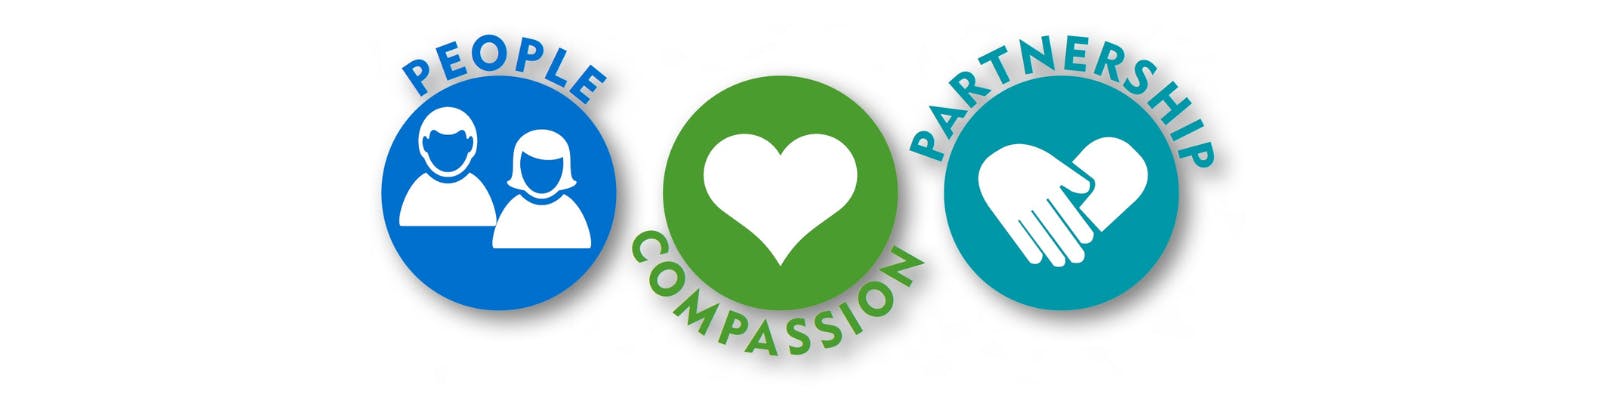 People, compassion, partnership